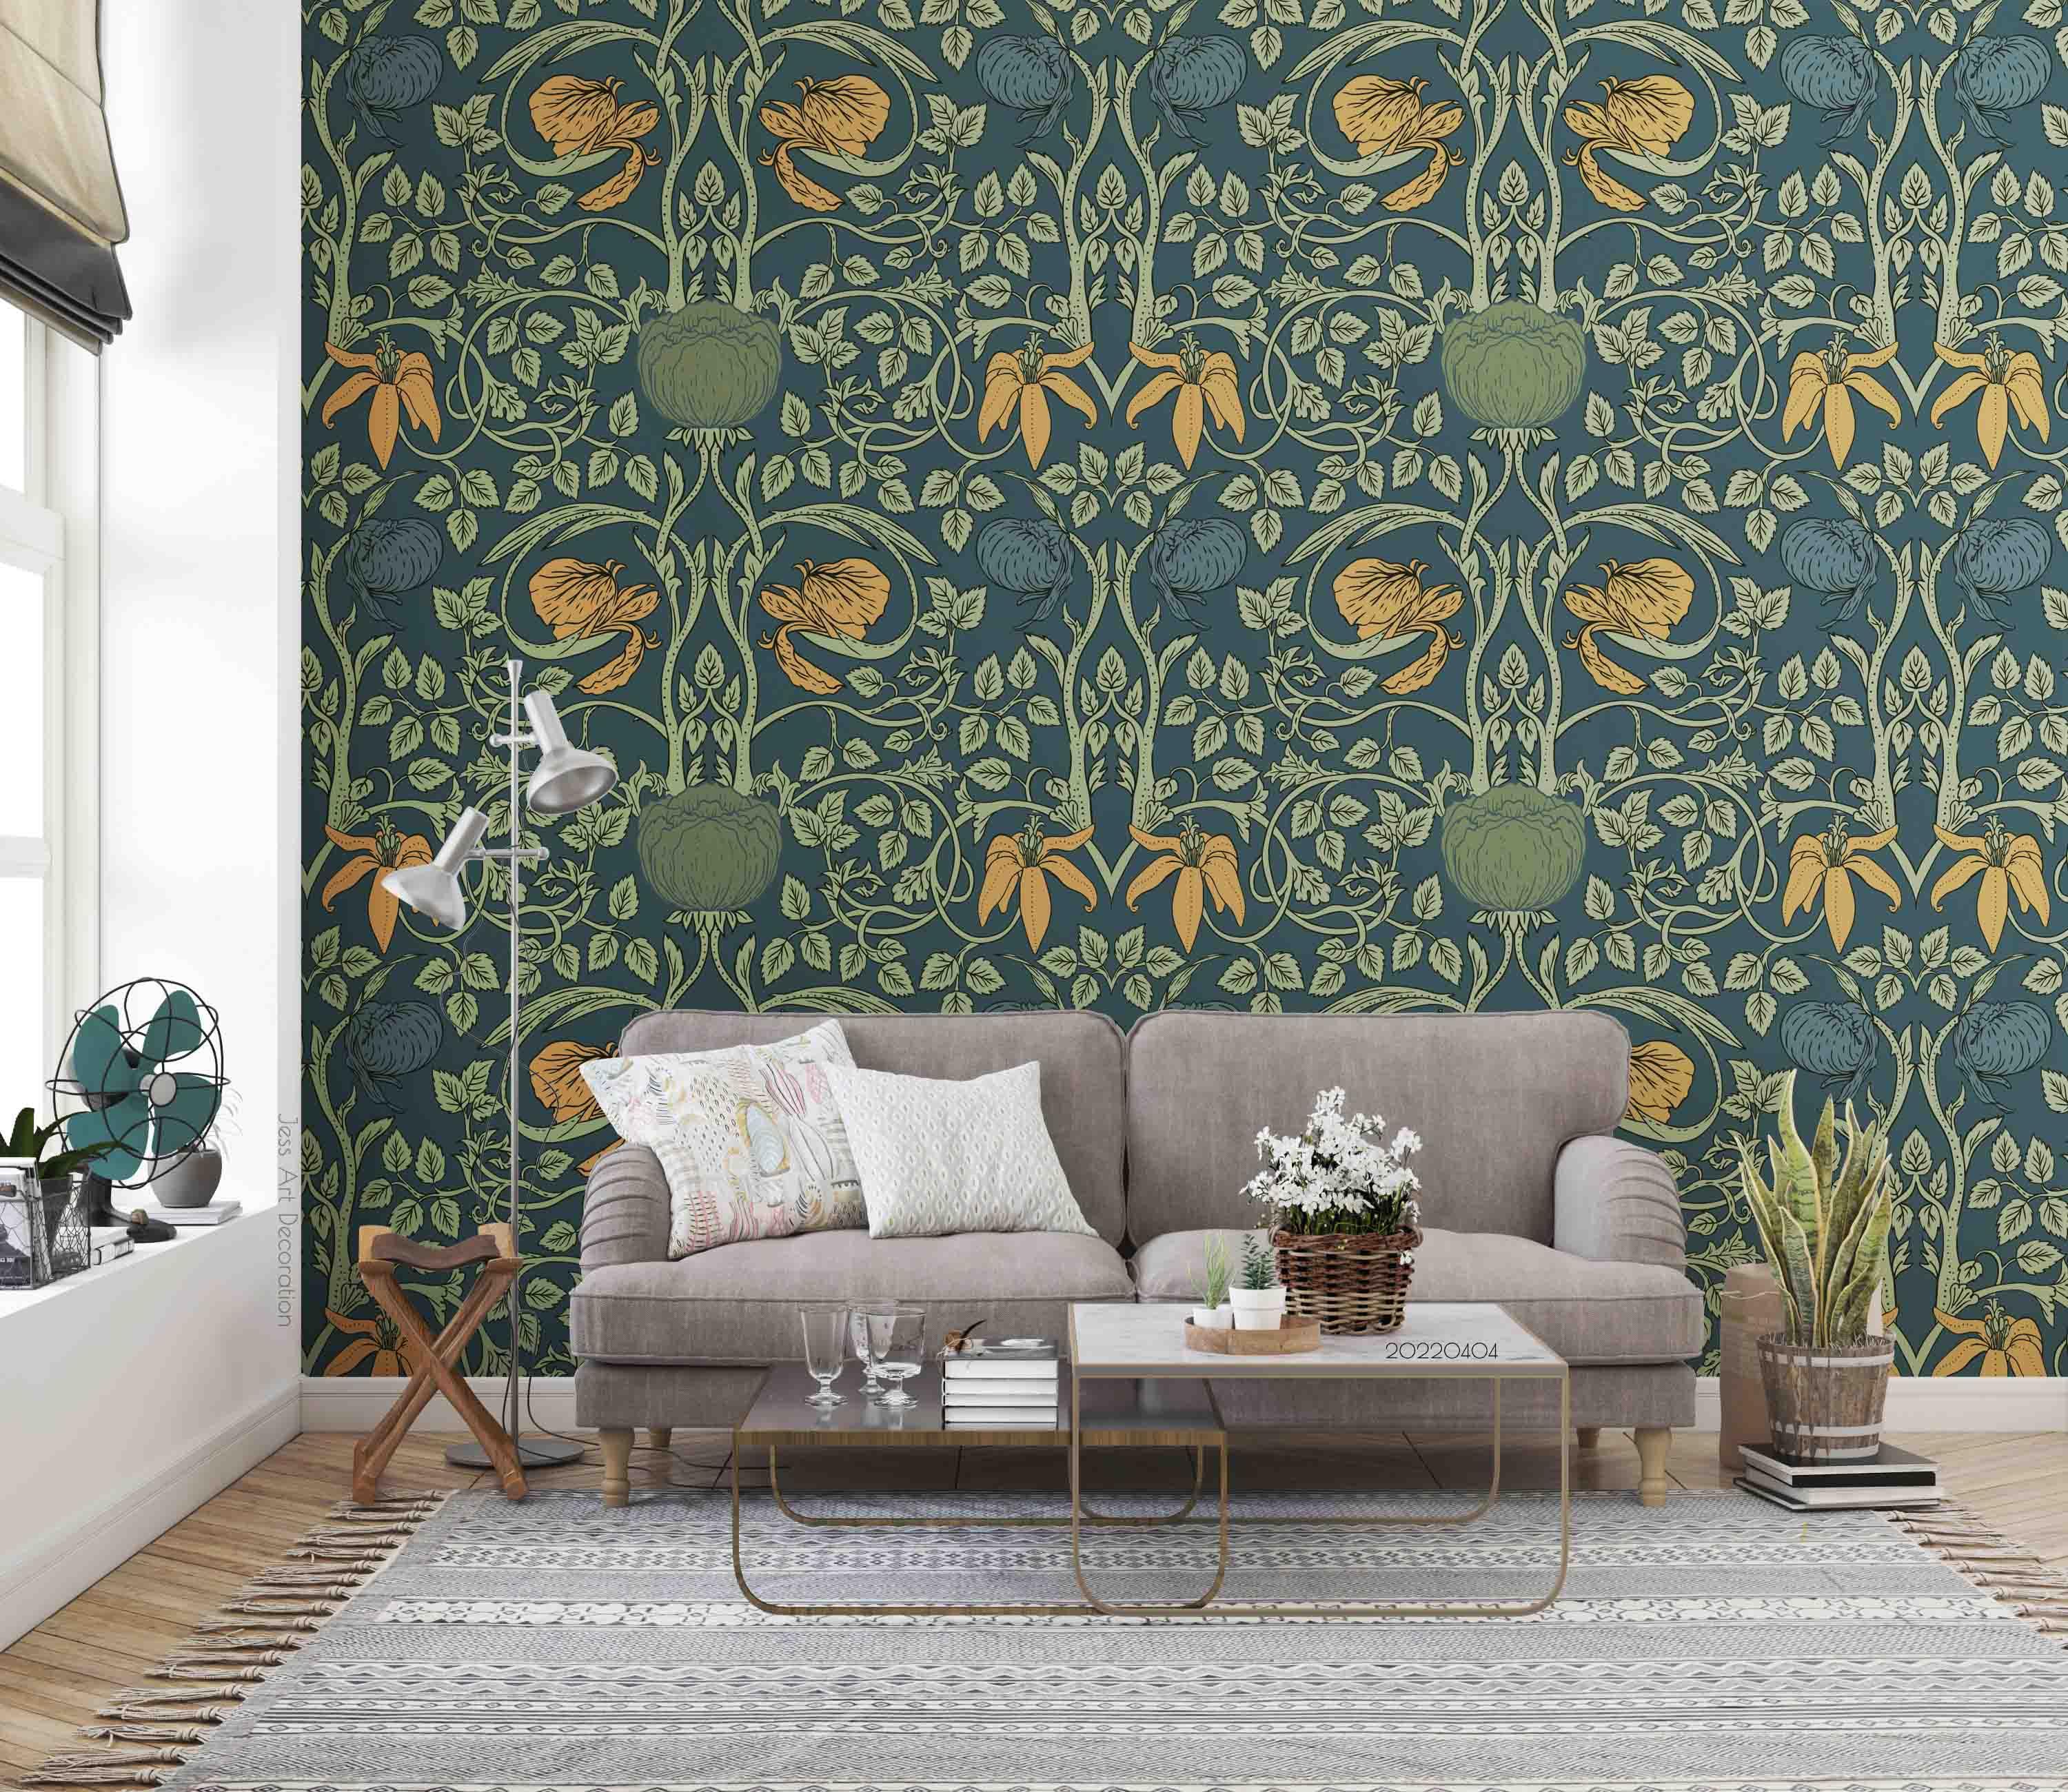 3D Vintage Plants Leaves Floral Pattern Wall Mural Wallpaper GD 4007- Jess Art Decoration